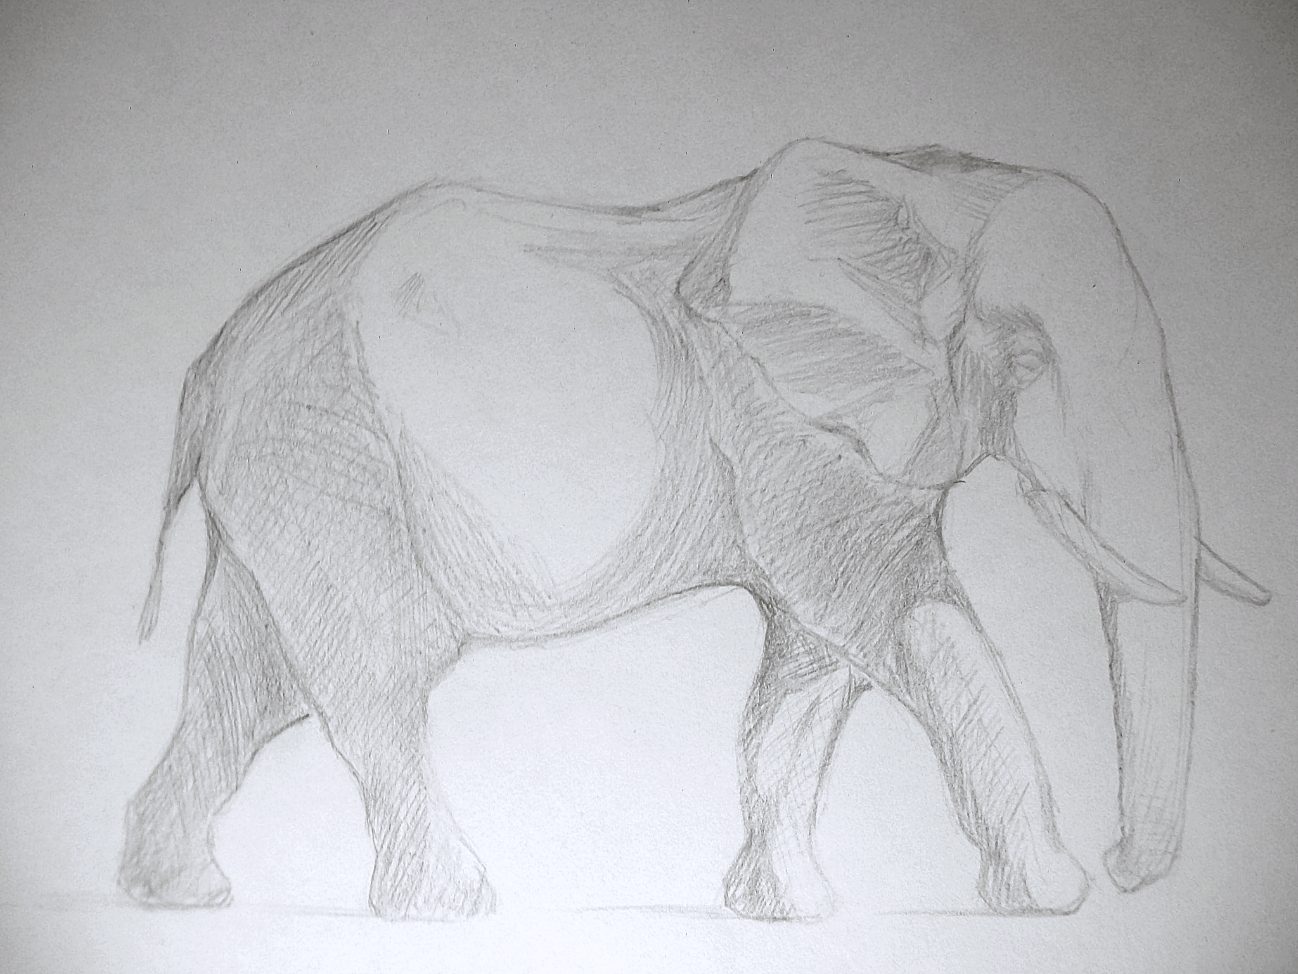 Cool Drawings Of Elephants